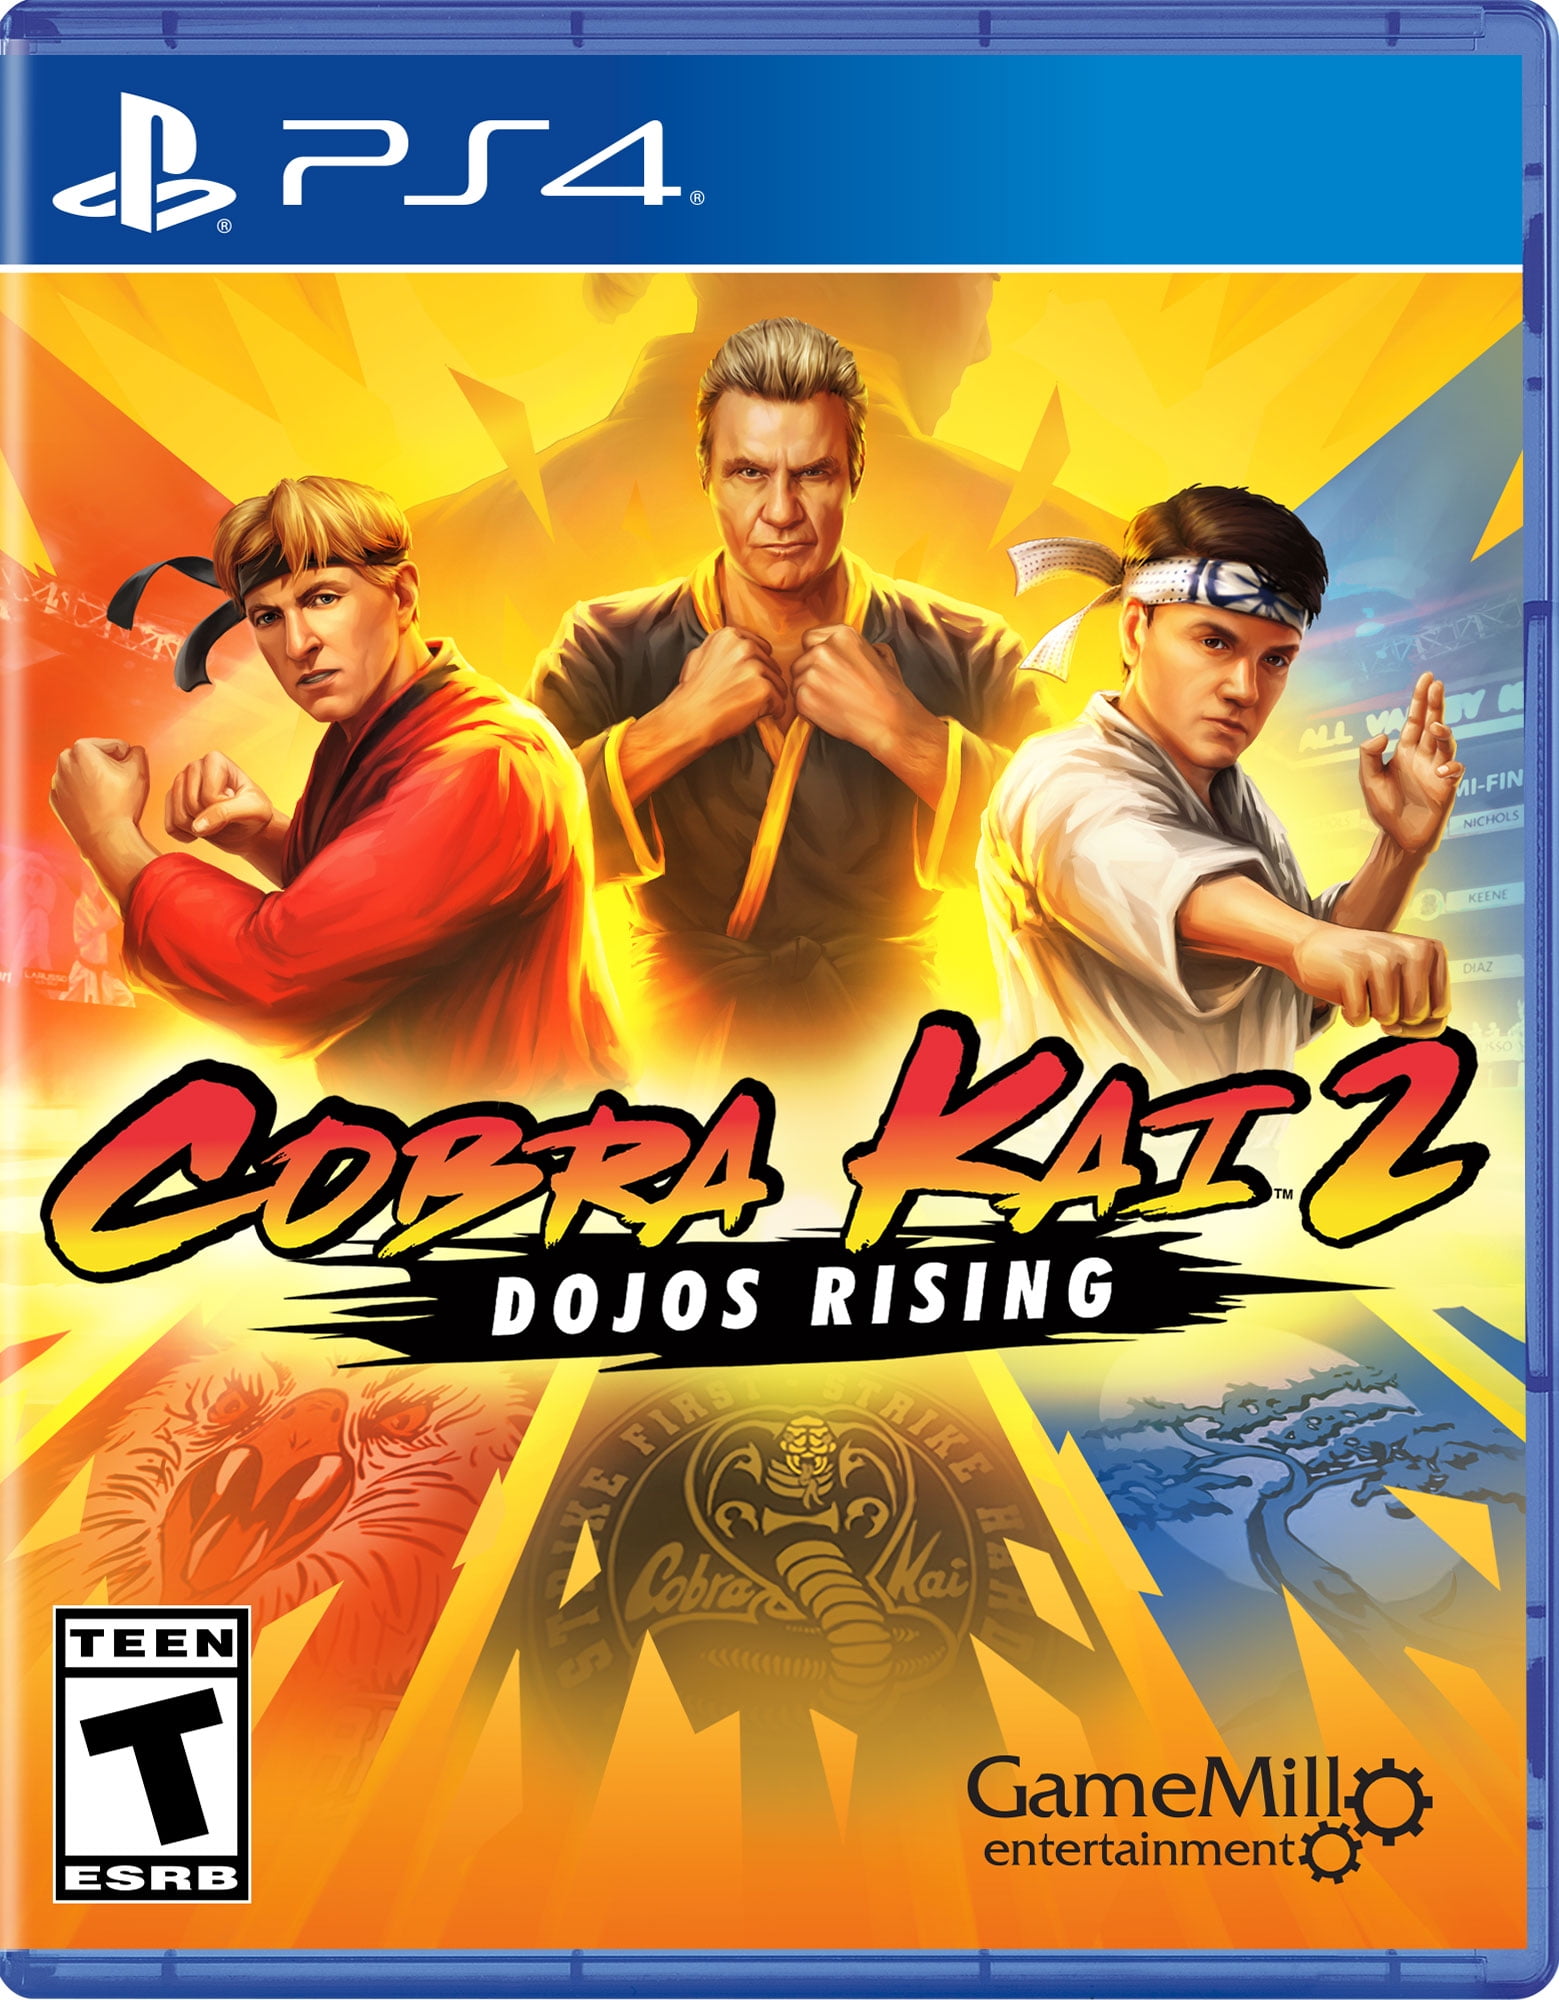 GameMill Cobra Kai 2: Dojos Rising, Playstation 4